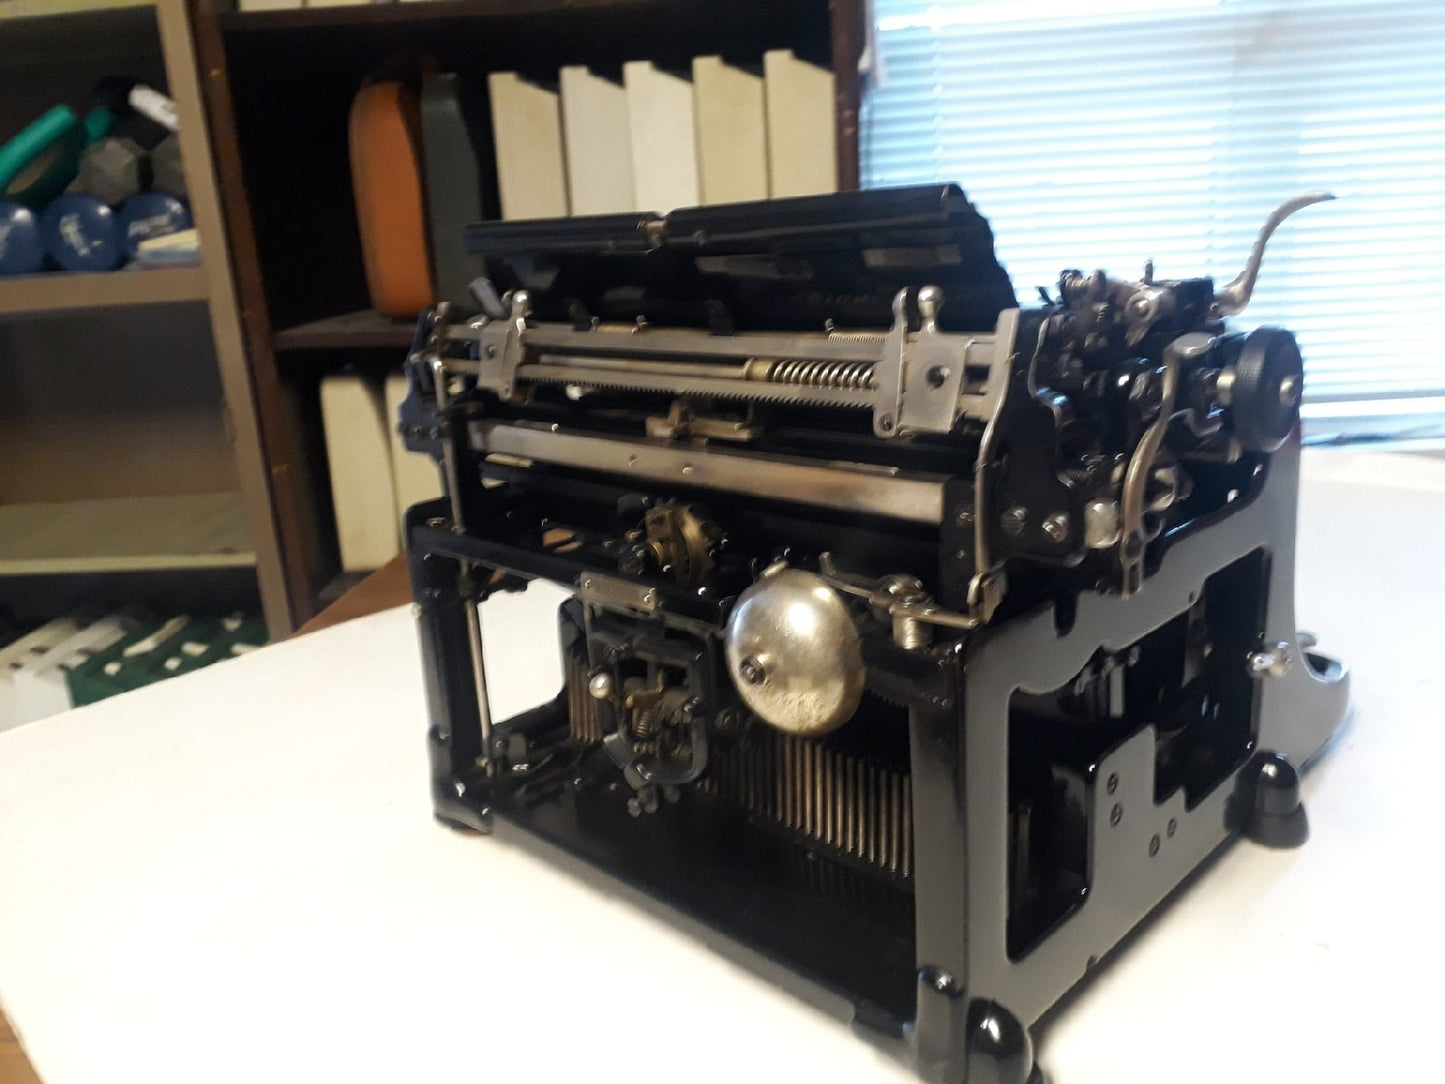 1930's Germany Stoewer Record Typewriter, Rare Stoewer Record Work and Clean Typewriter, Rare Font Typewriter